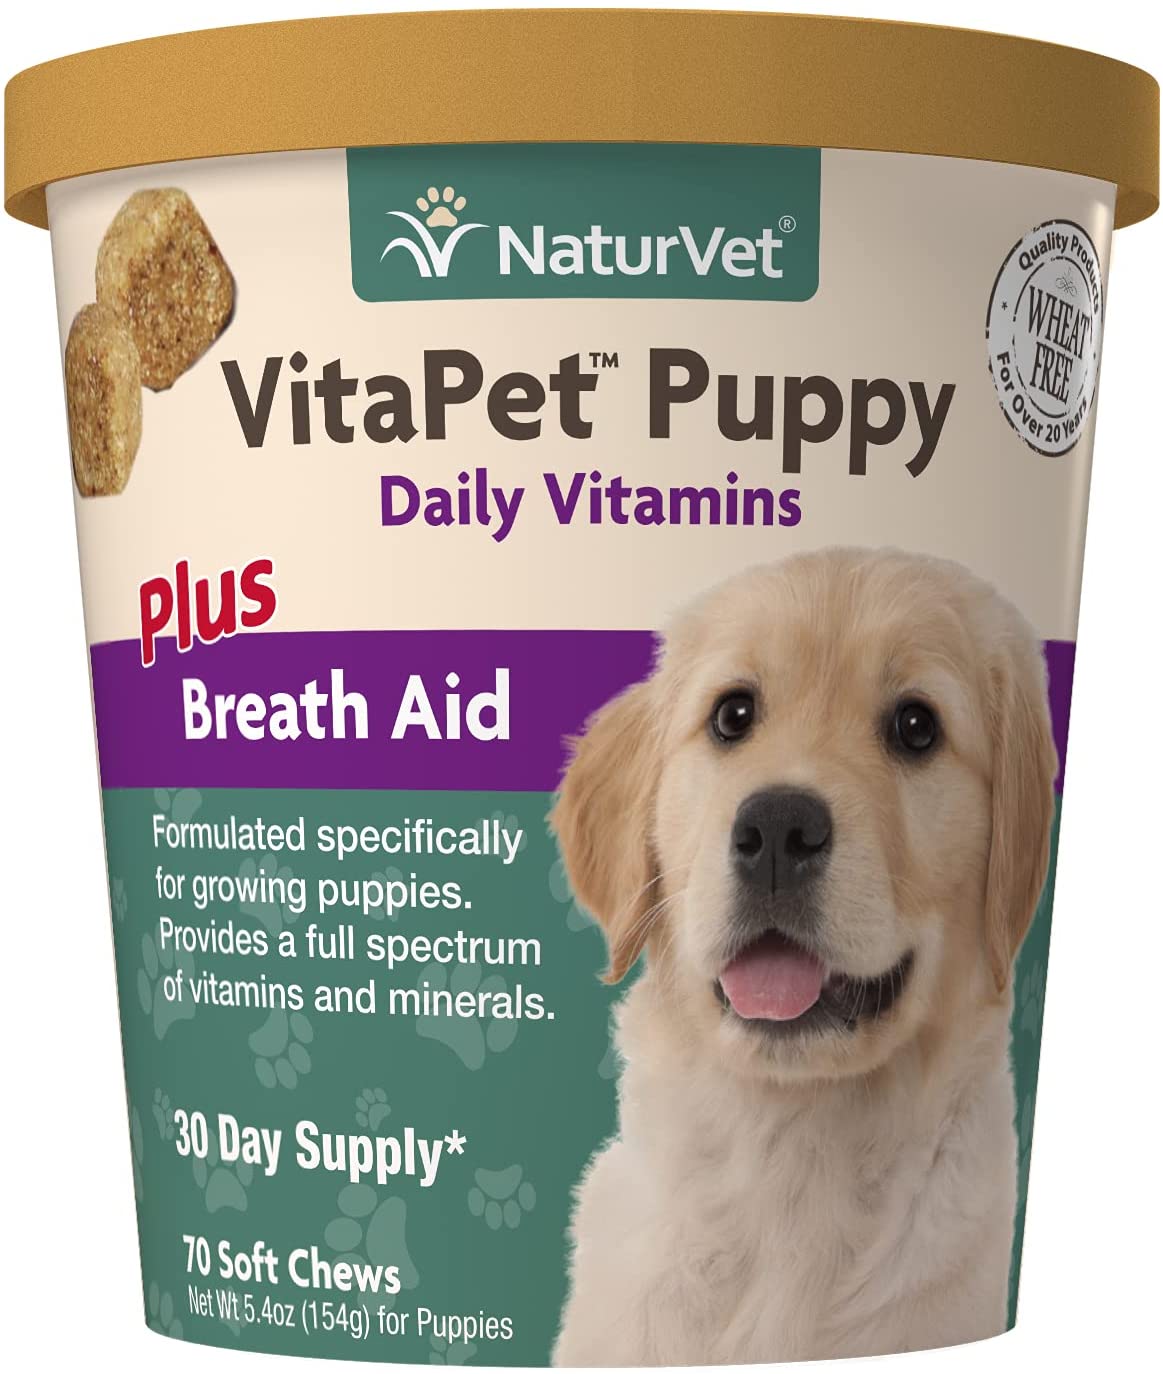 NaturVet VitaPet Puppy Daily Vitamins for Dog